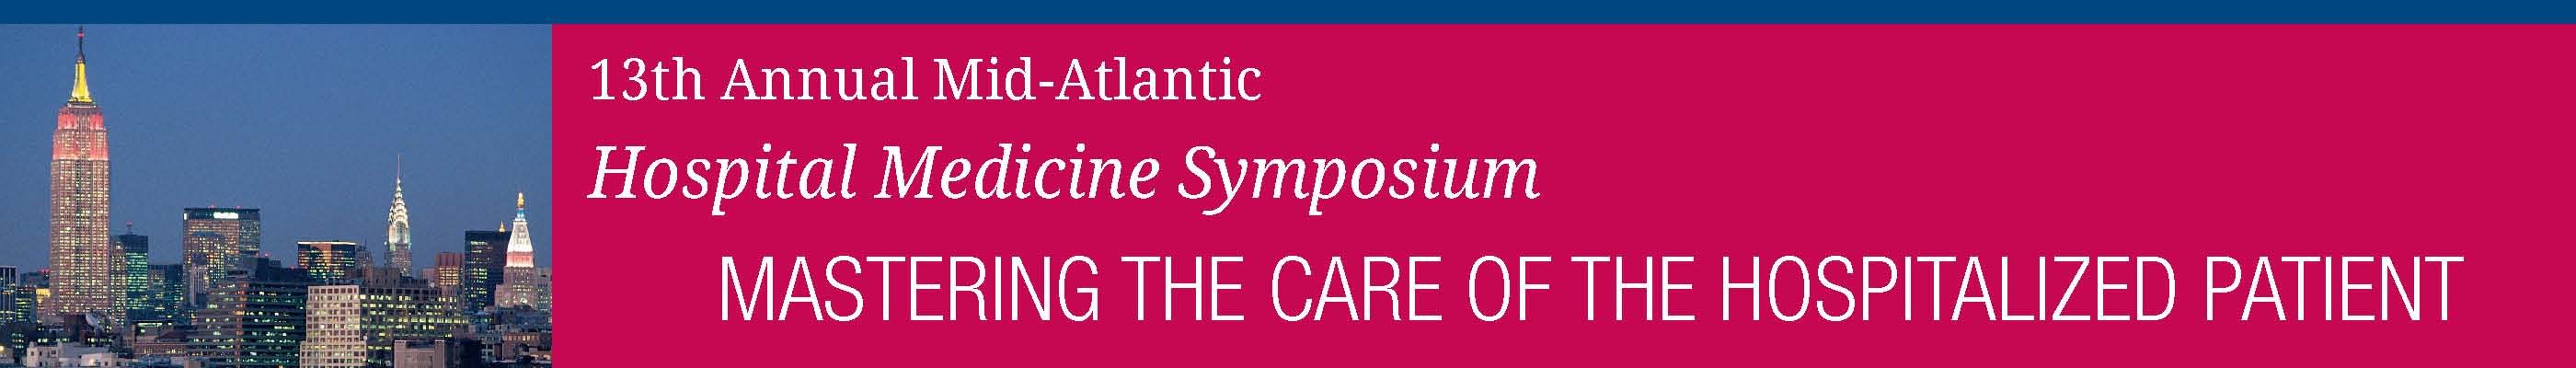 Annual Mid-Atlantic Hospital Medicine 2018 Banner